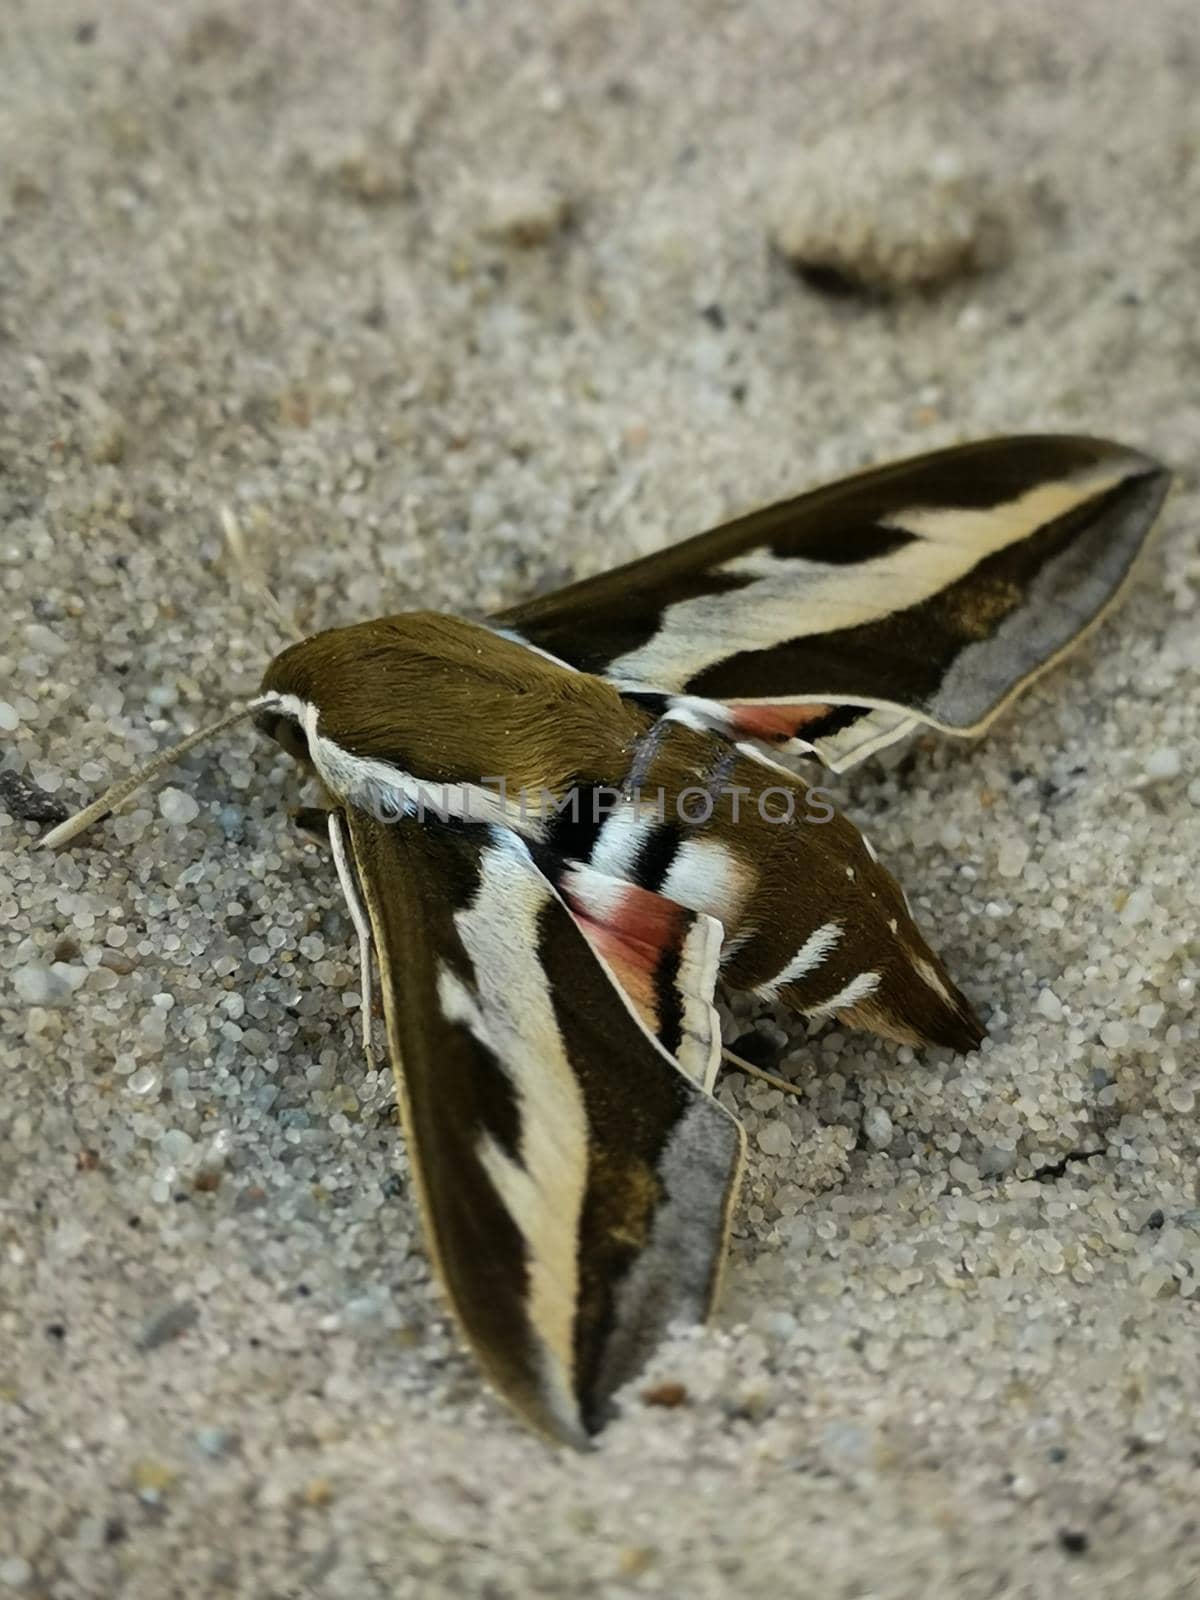 Closeup shot of a bedstraw hawk-moth on sand